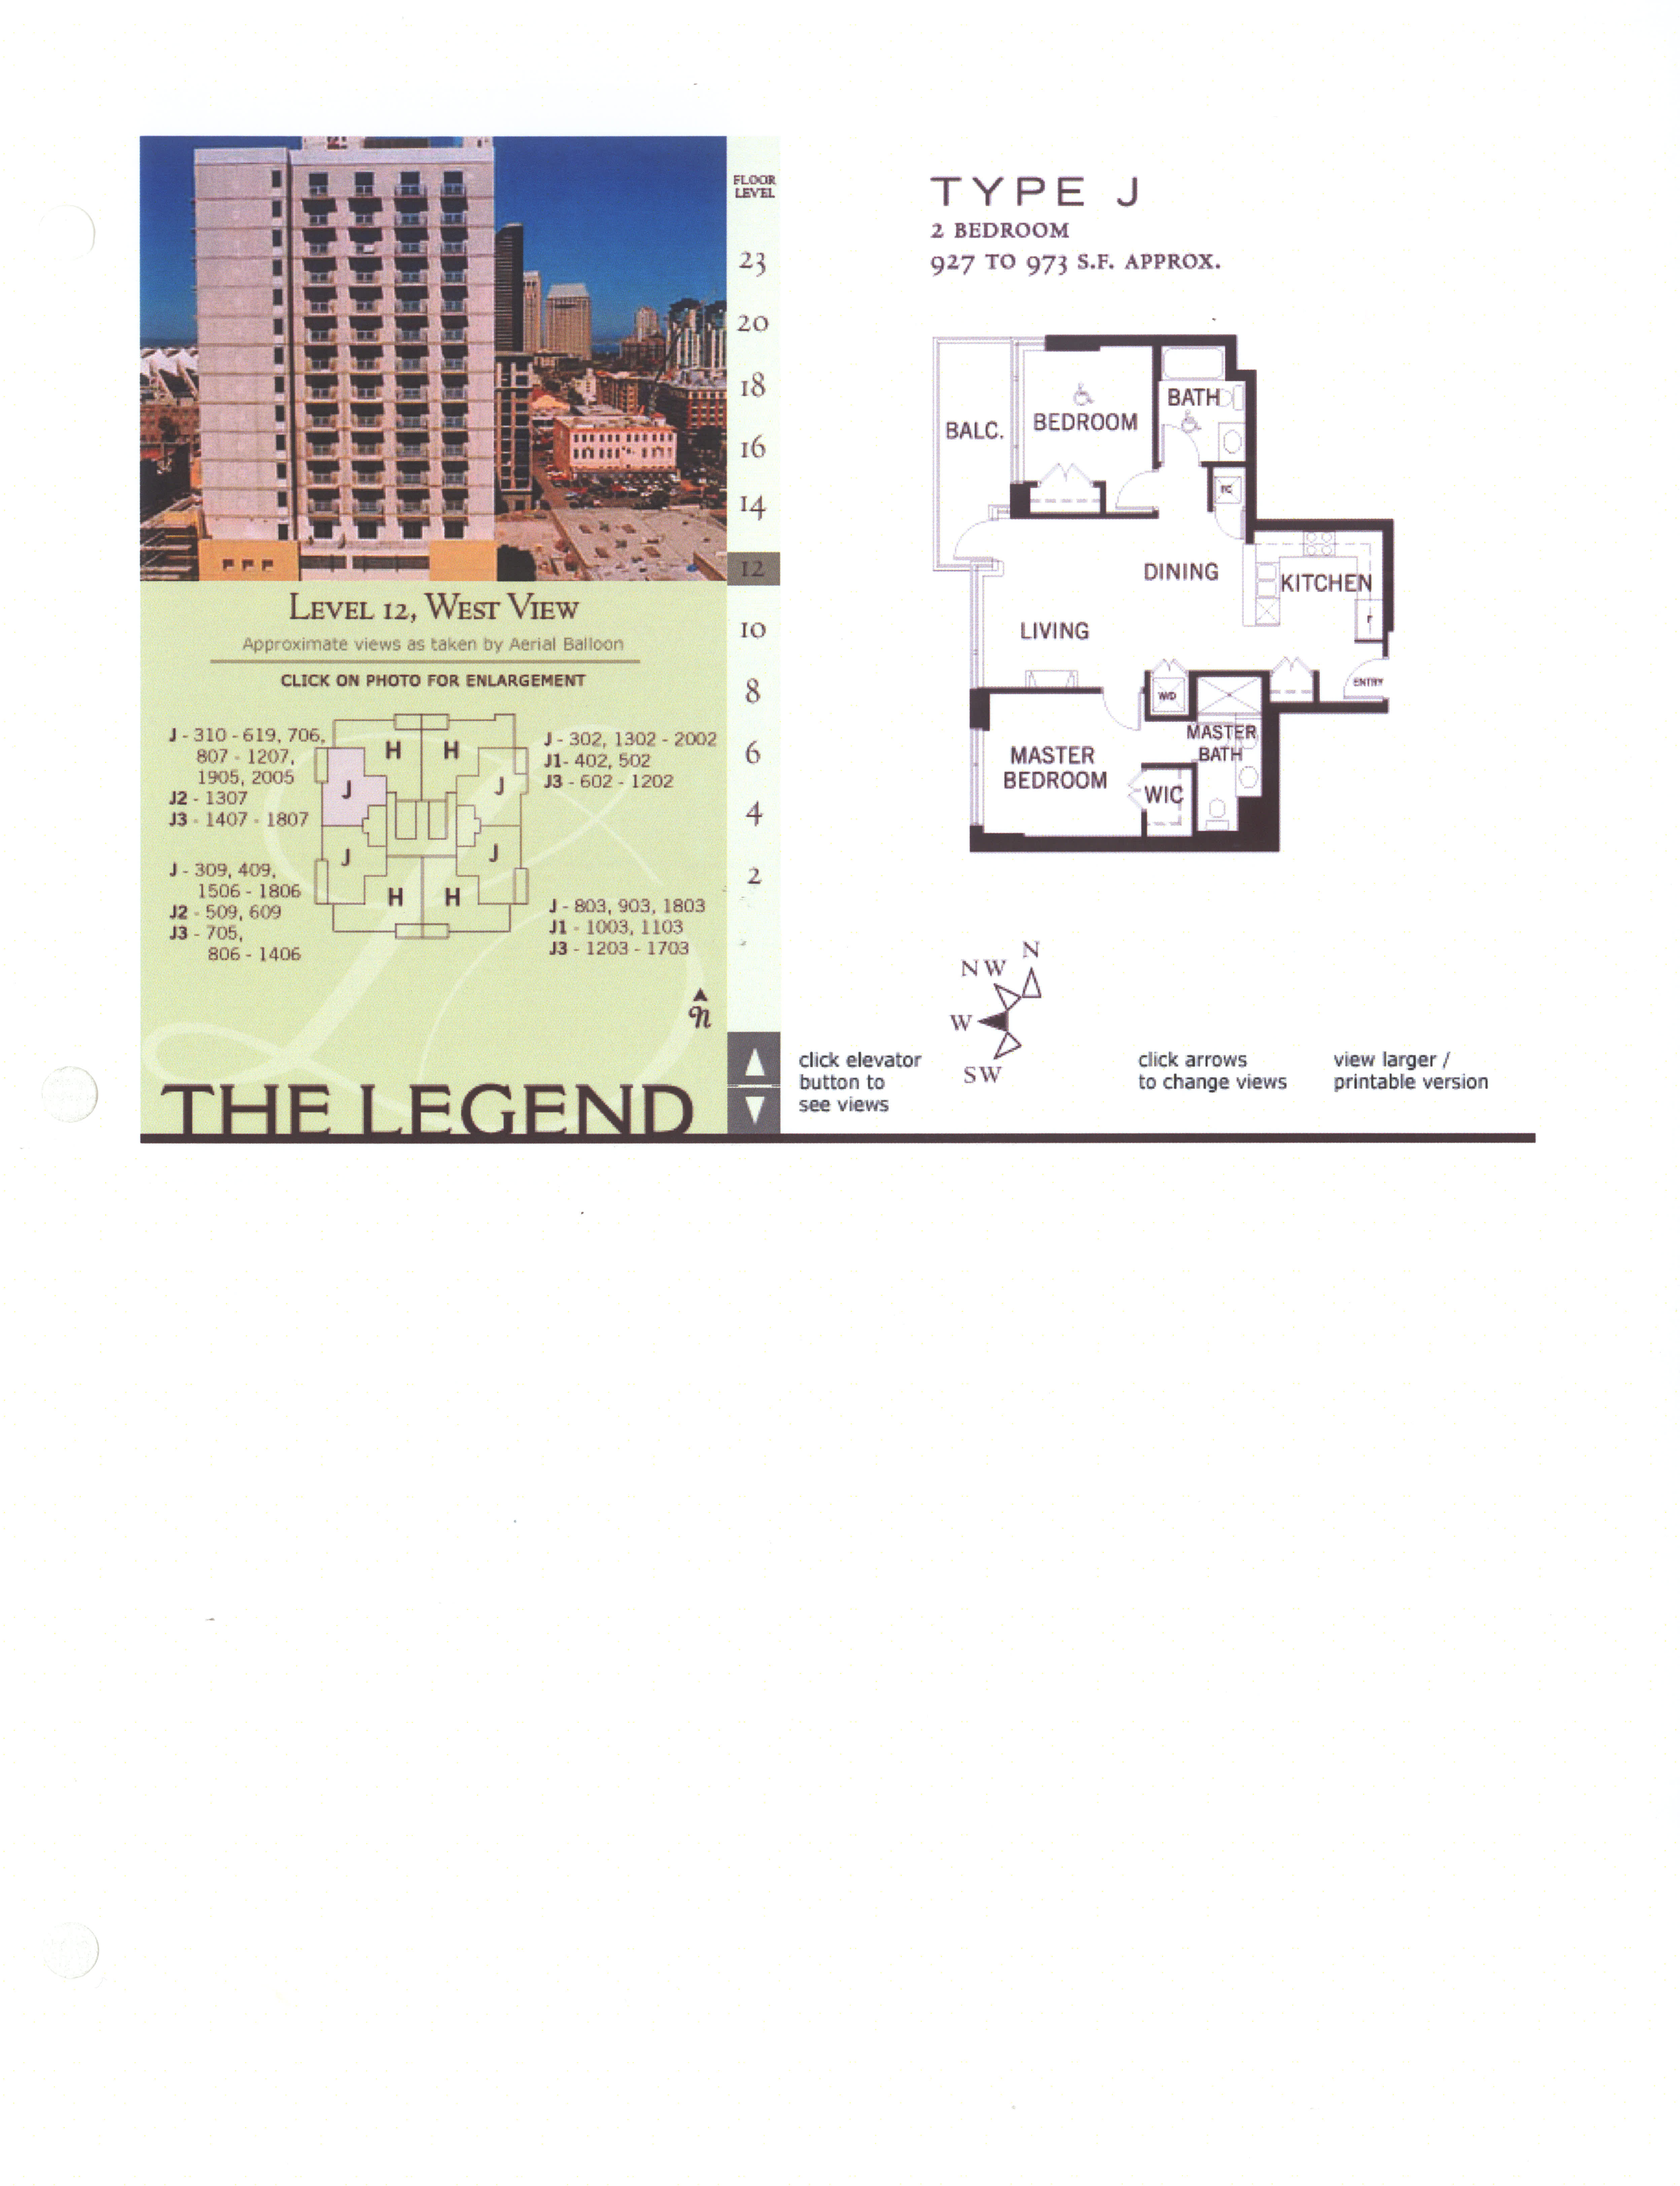 The Legend Floor Plan Level 12, West View – Type J